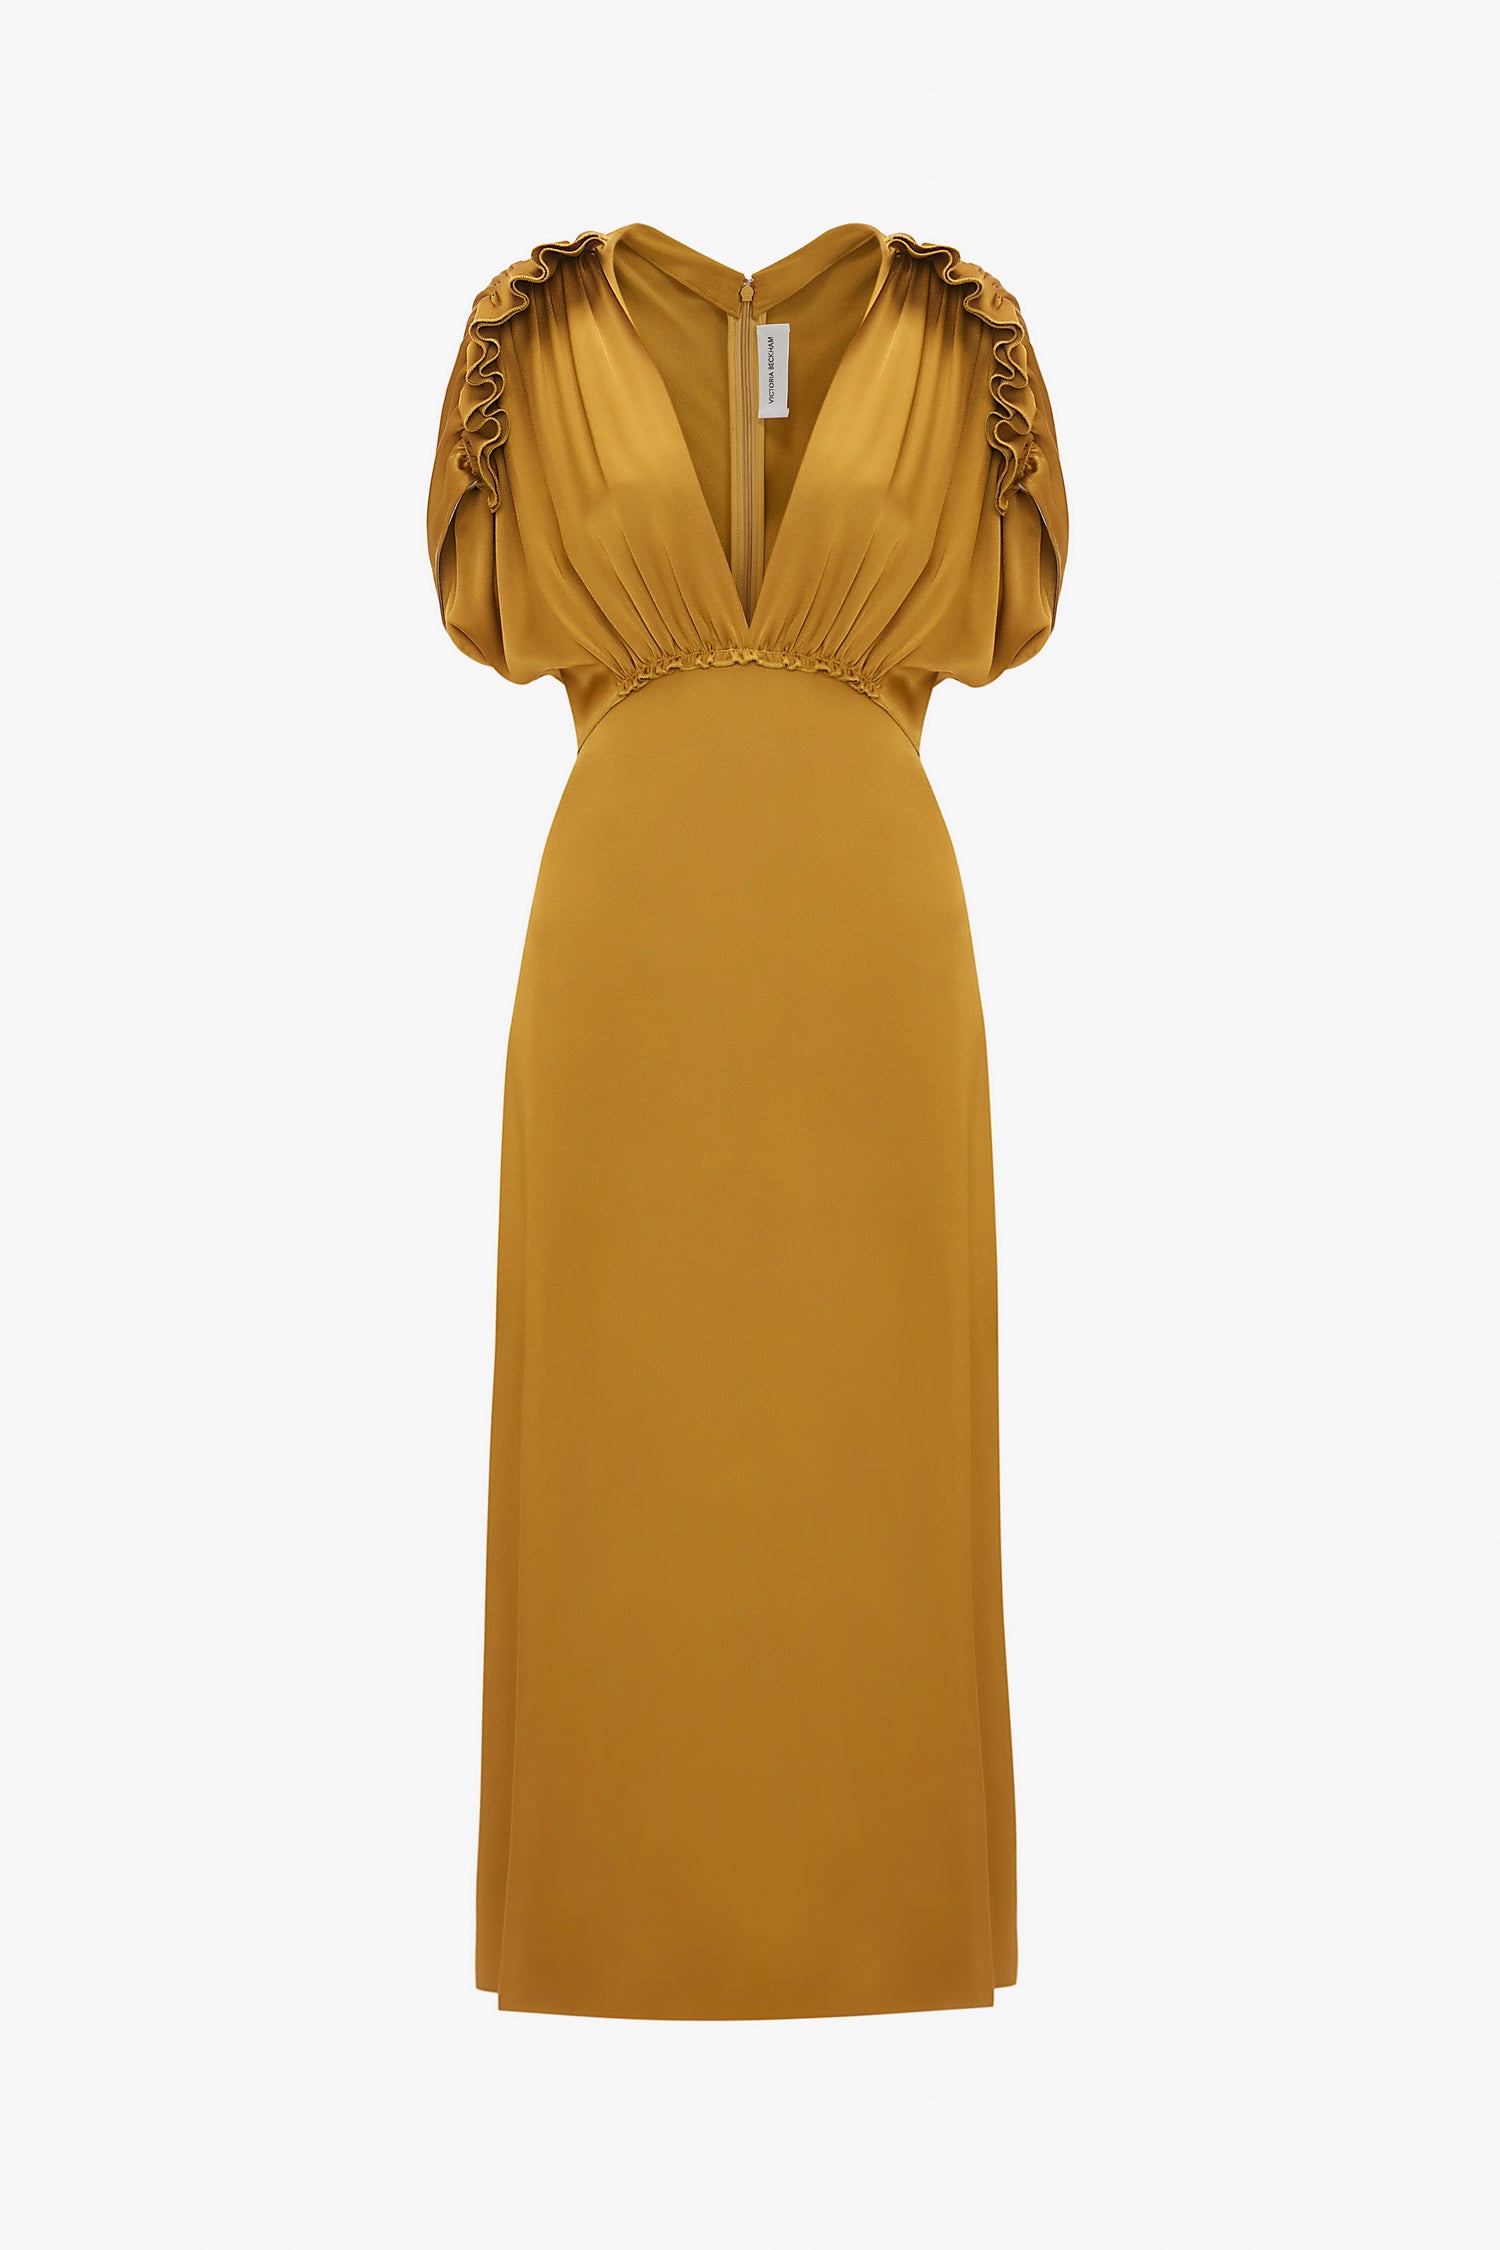 A Victoria Beckham V-Neck Ruffle Midi Dress In Harvest Gold featuring short shoulder frills, an empire waistline, and a deep V-neckline, displayed on a plain white background.